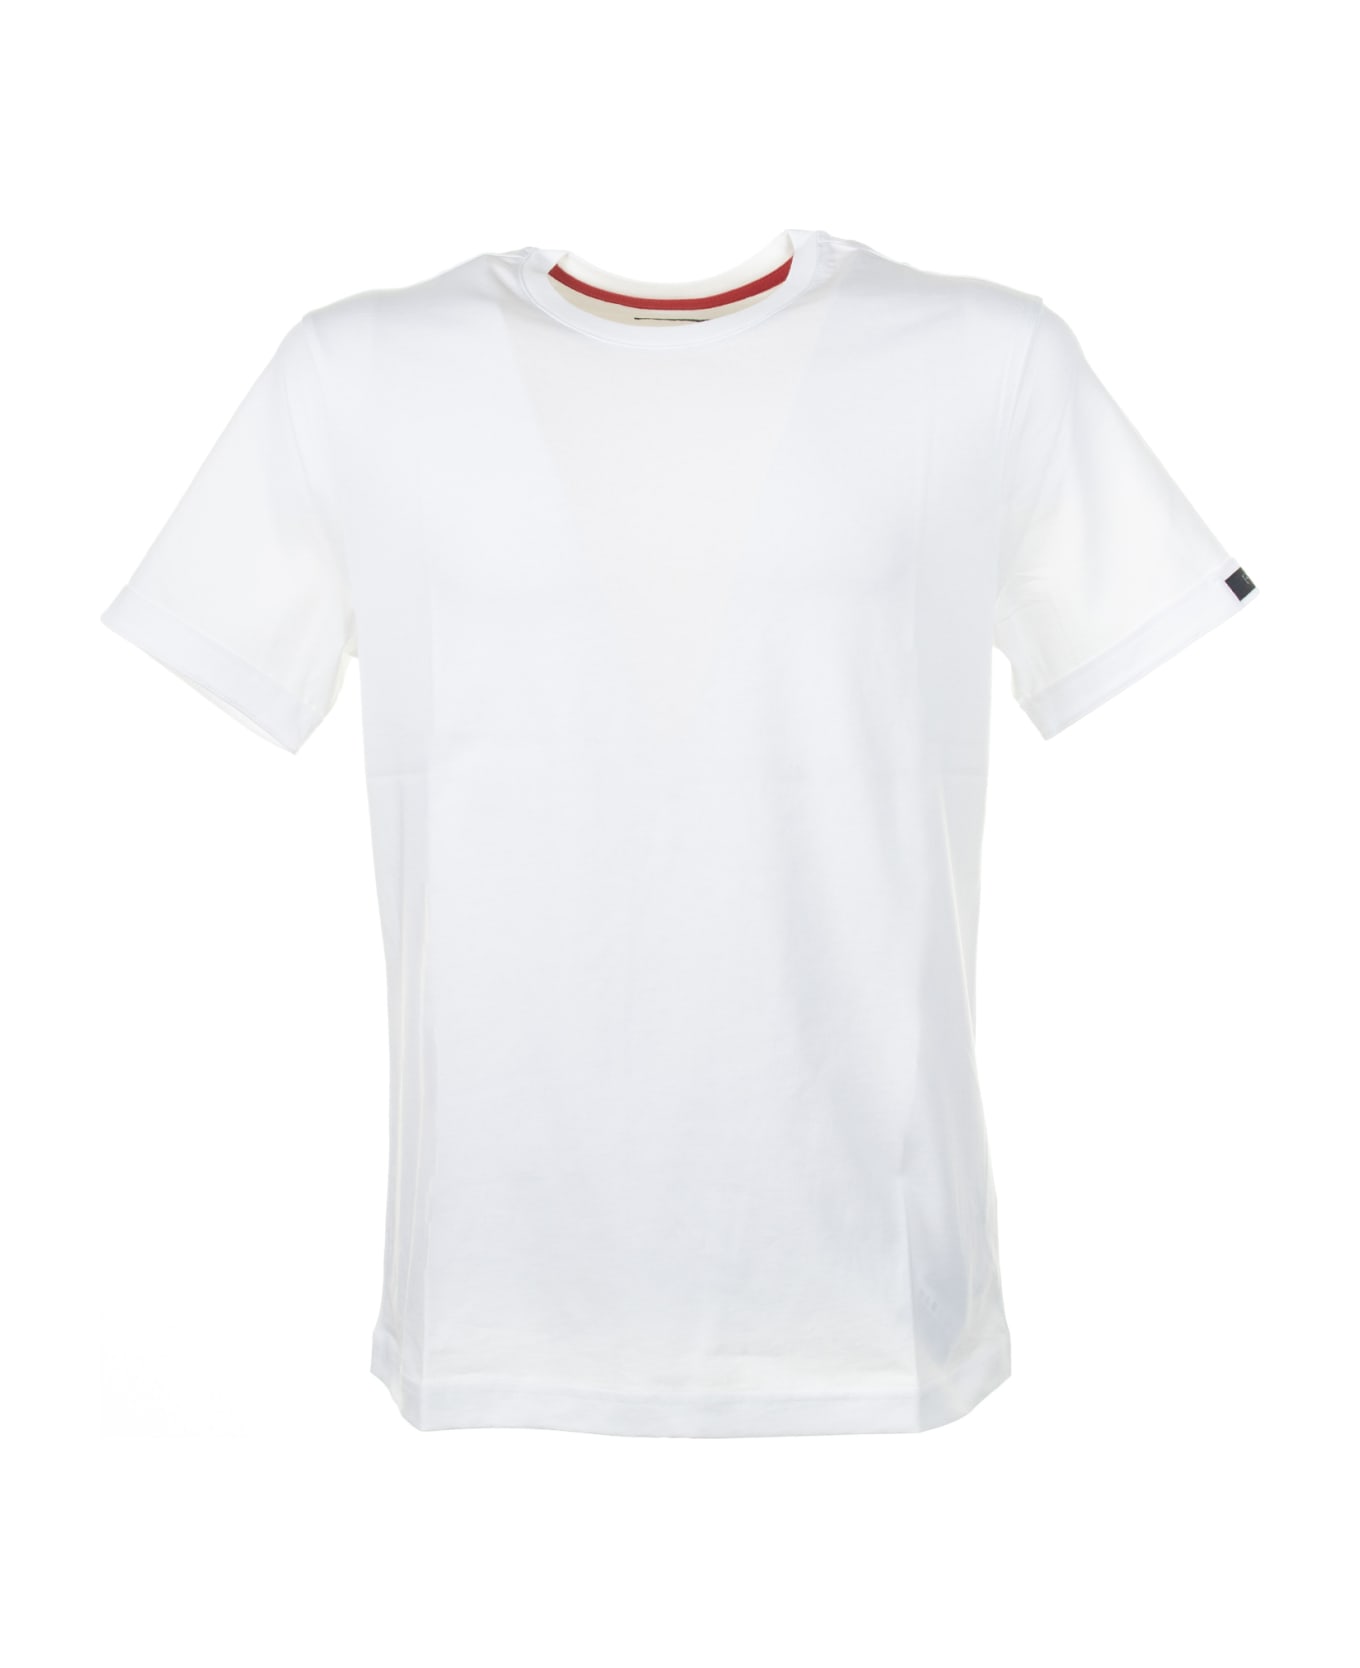 Fay White T-shirt - BIANCO シャツ